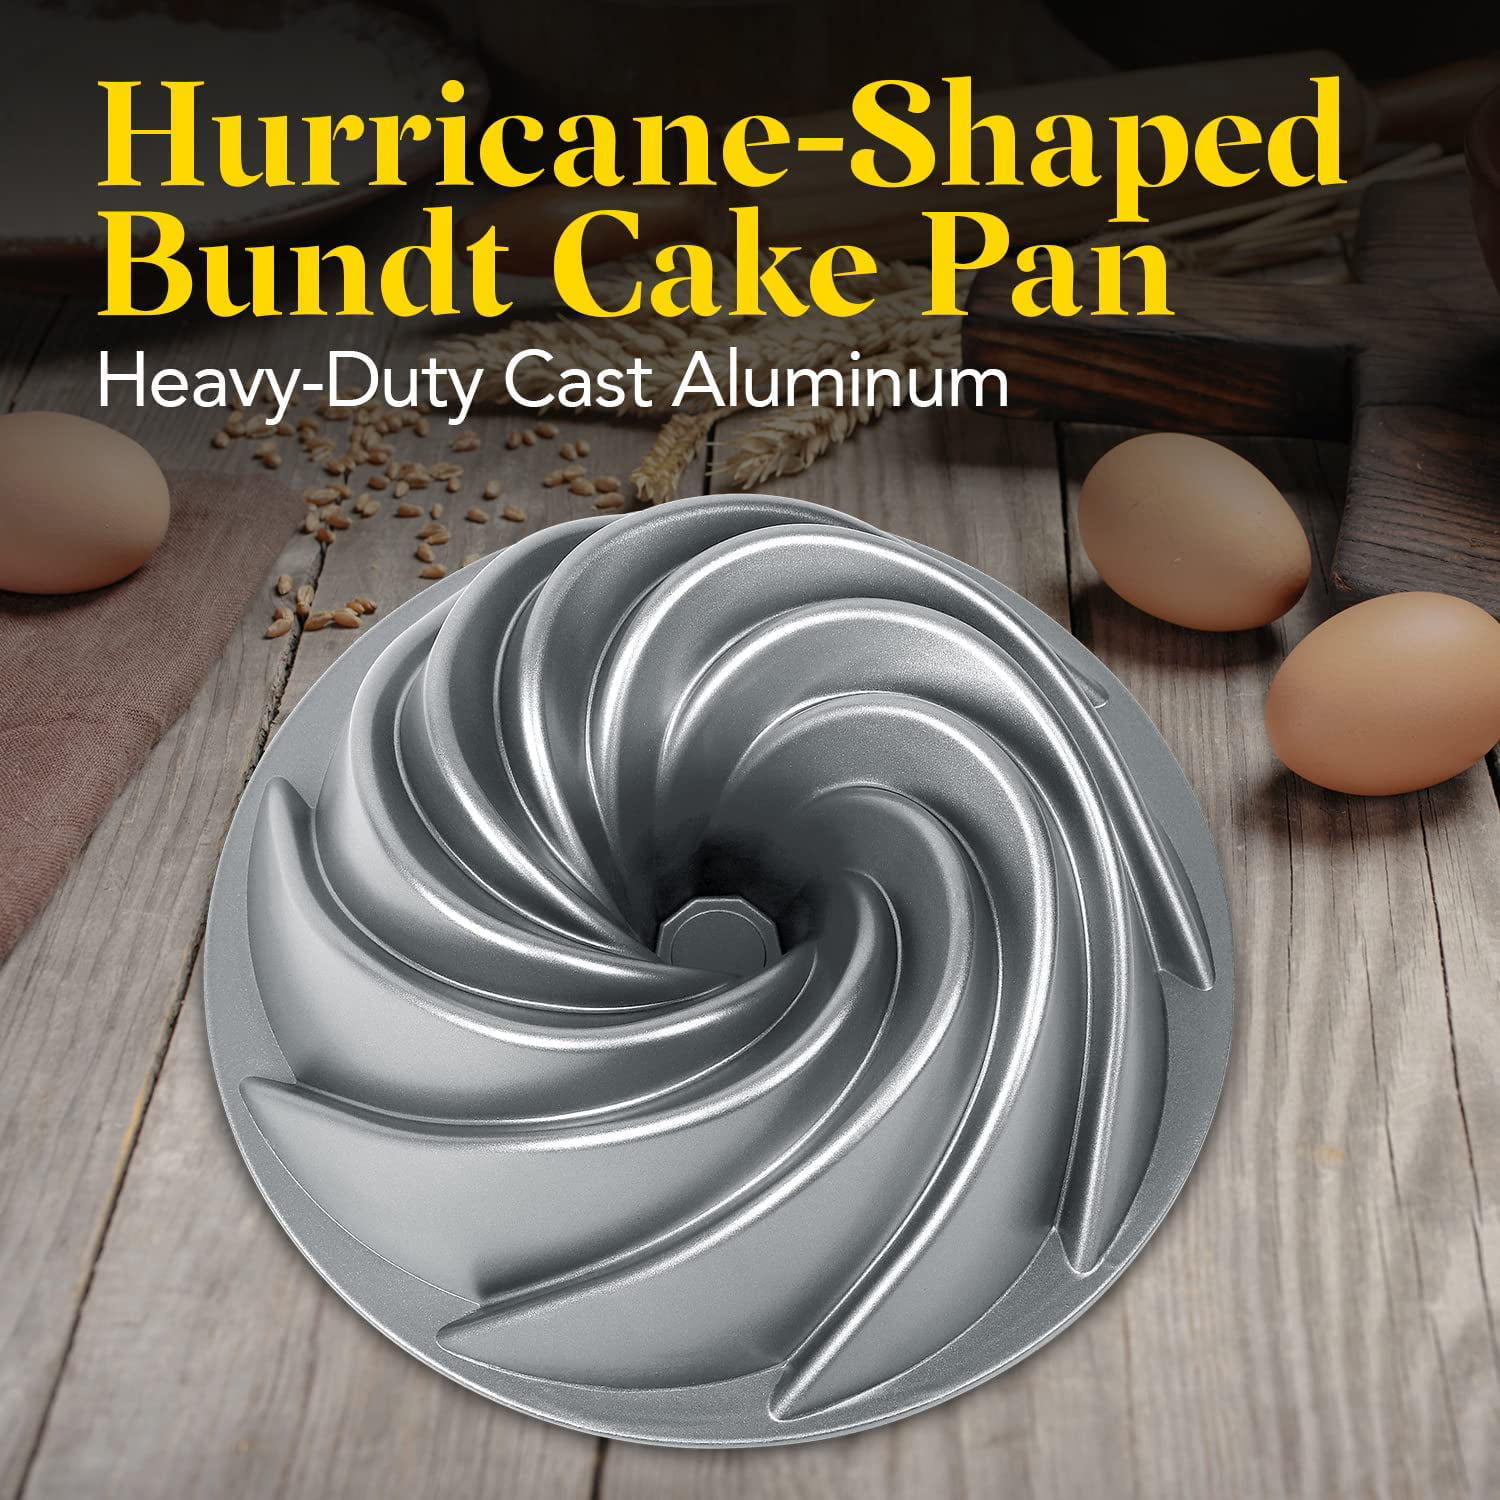 Cast Aluminum Non Stick Swirl Bundt Pan For Baking 10 Inch Spiral